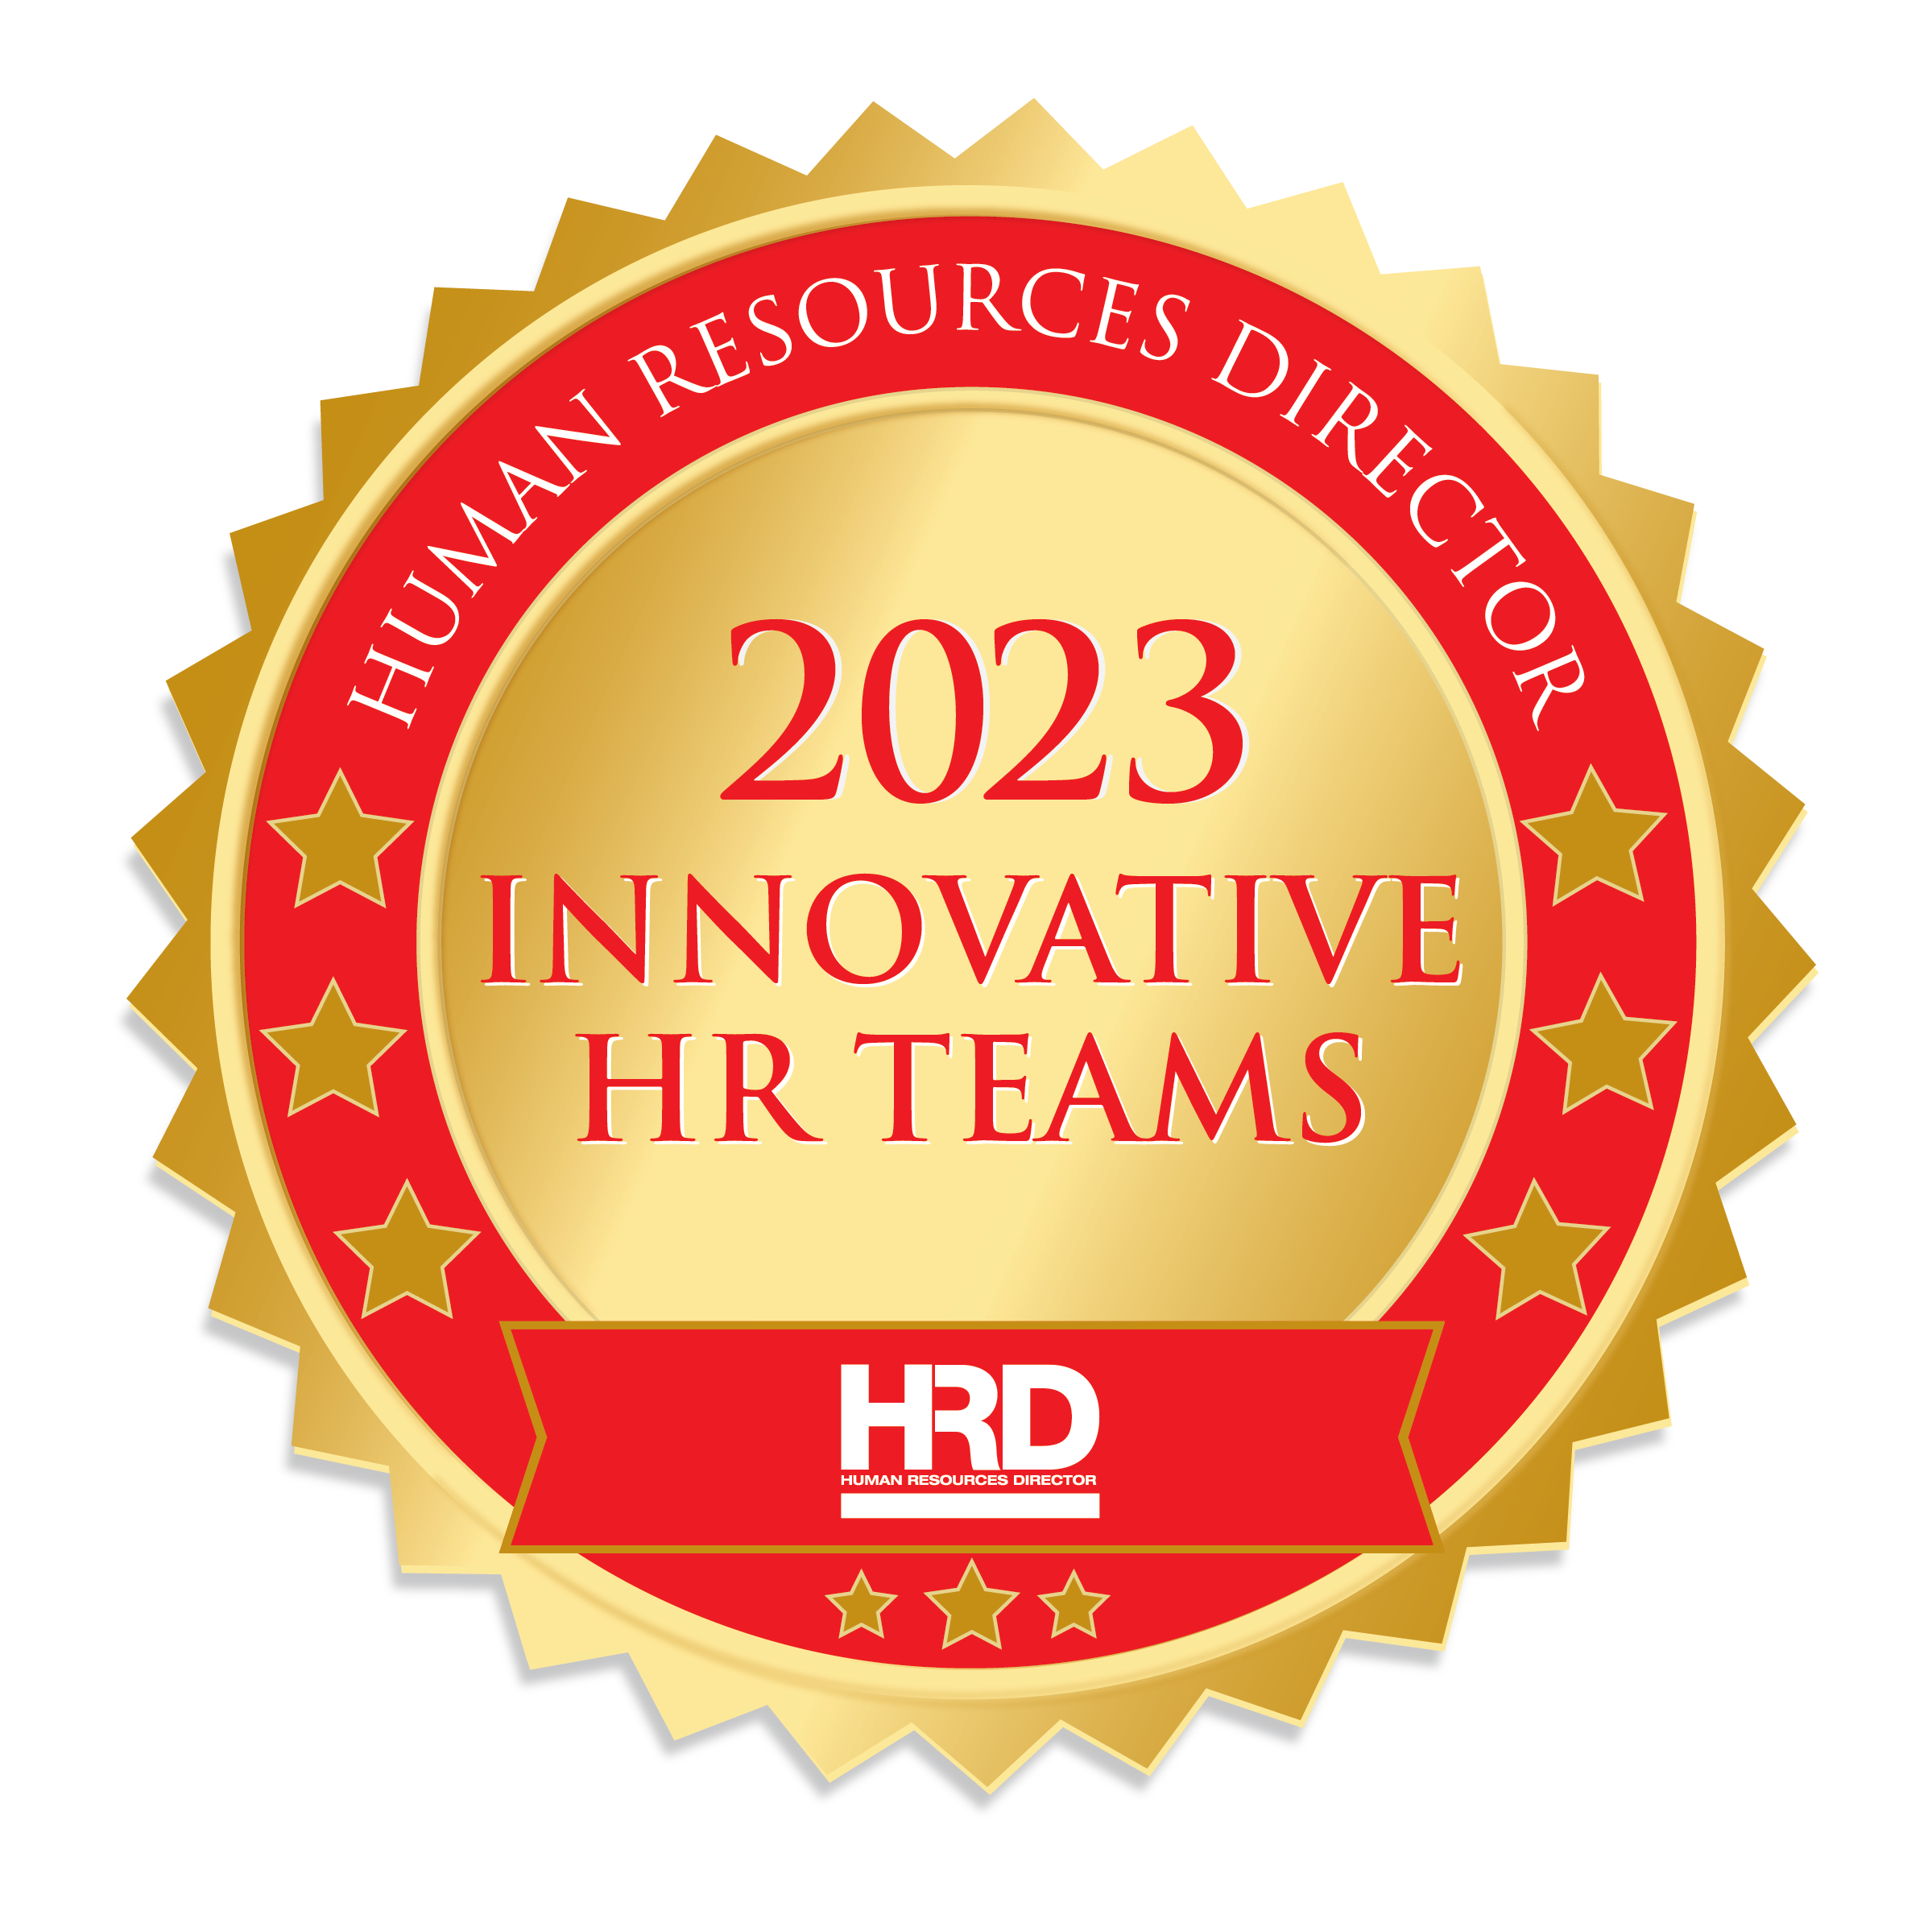 The Best HR Teams for Innovation in Australia | Innovative HR Teams 2023